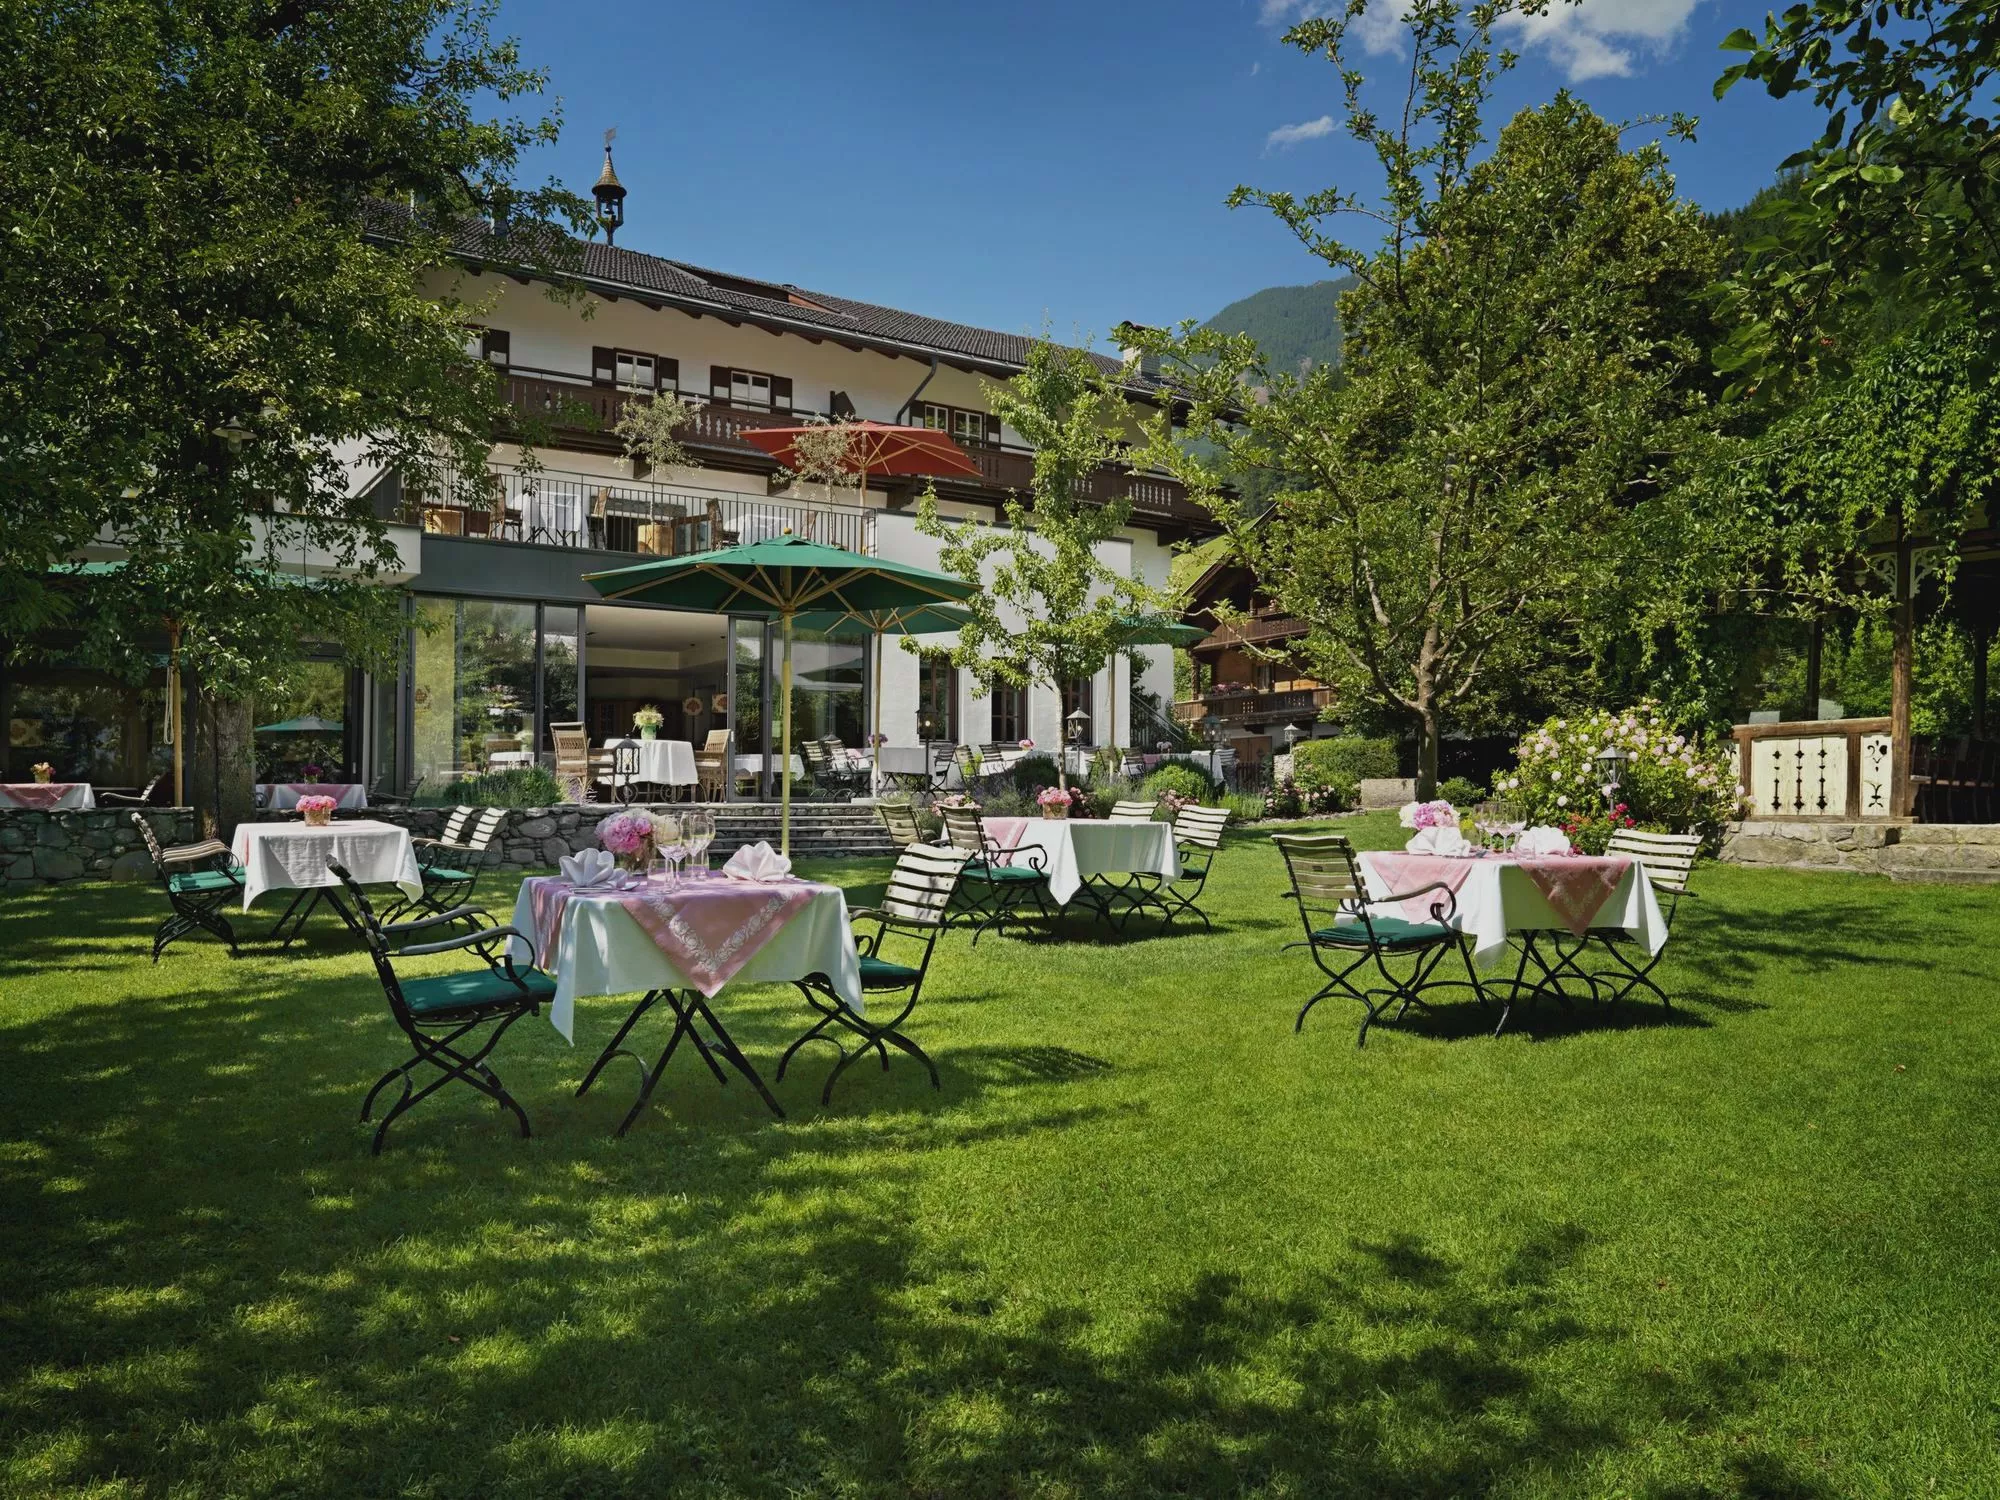 Hotel Landgasthof Linde with garden in Stumm, Zillertal valley, Tyrol (c) Photo Heli Hinkel